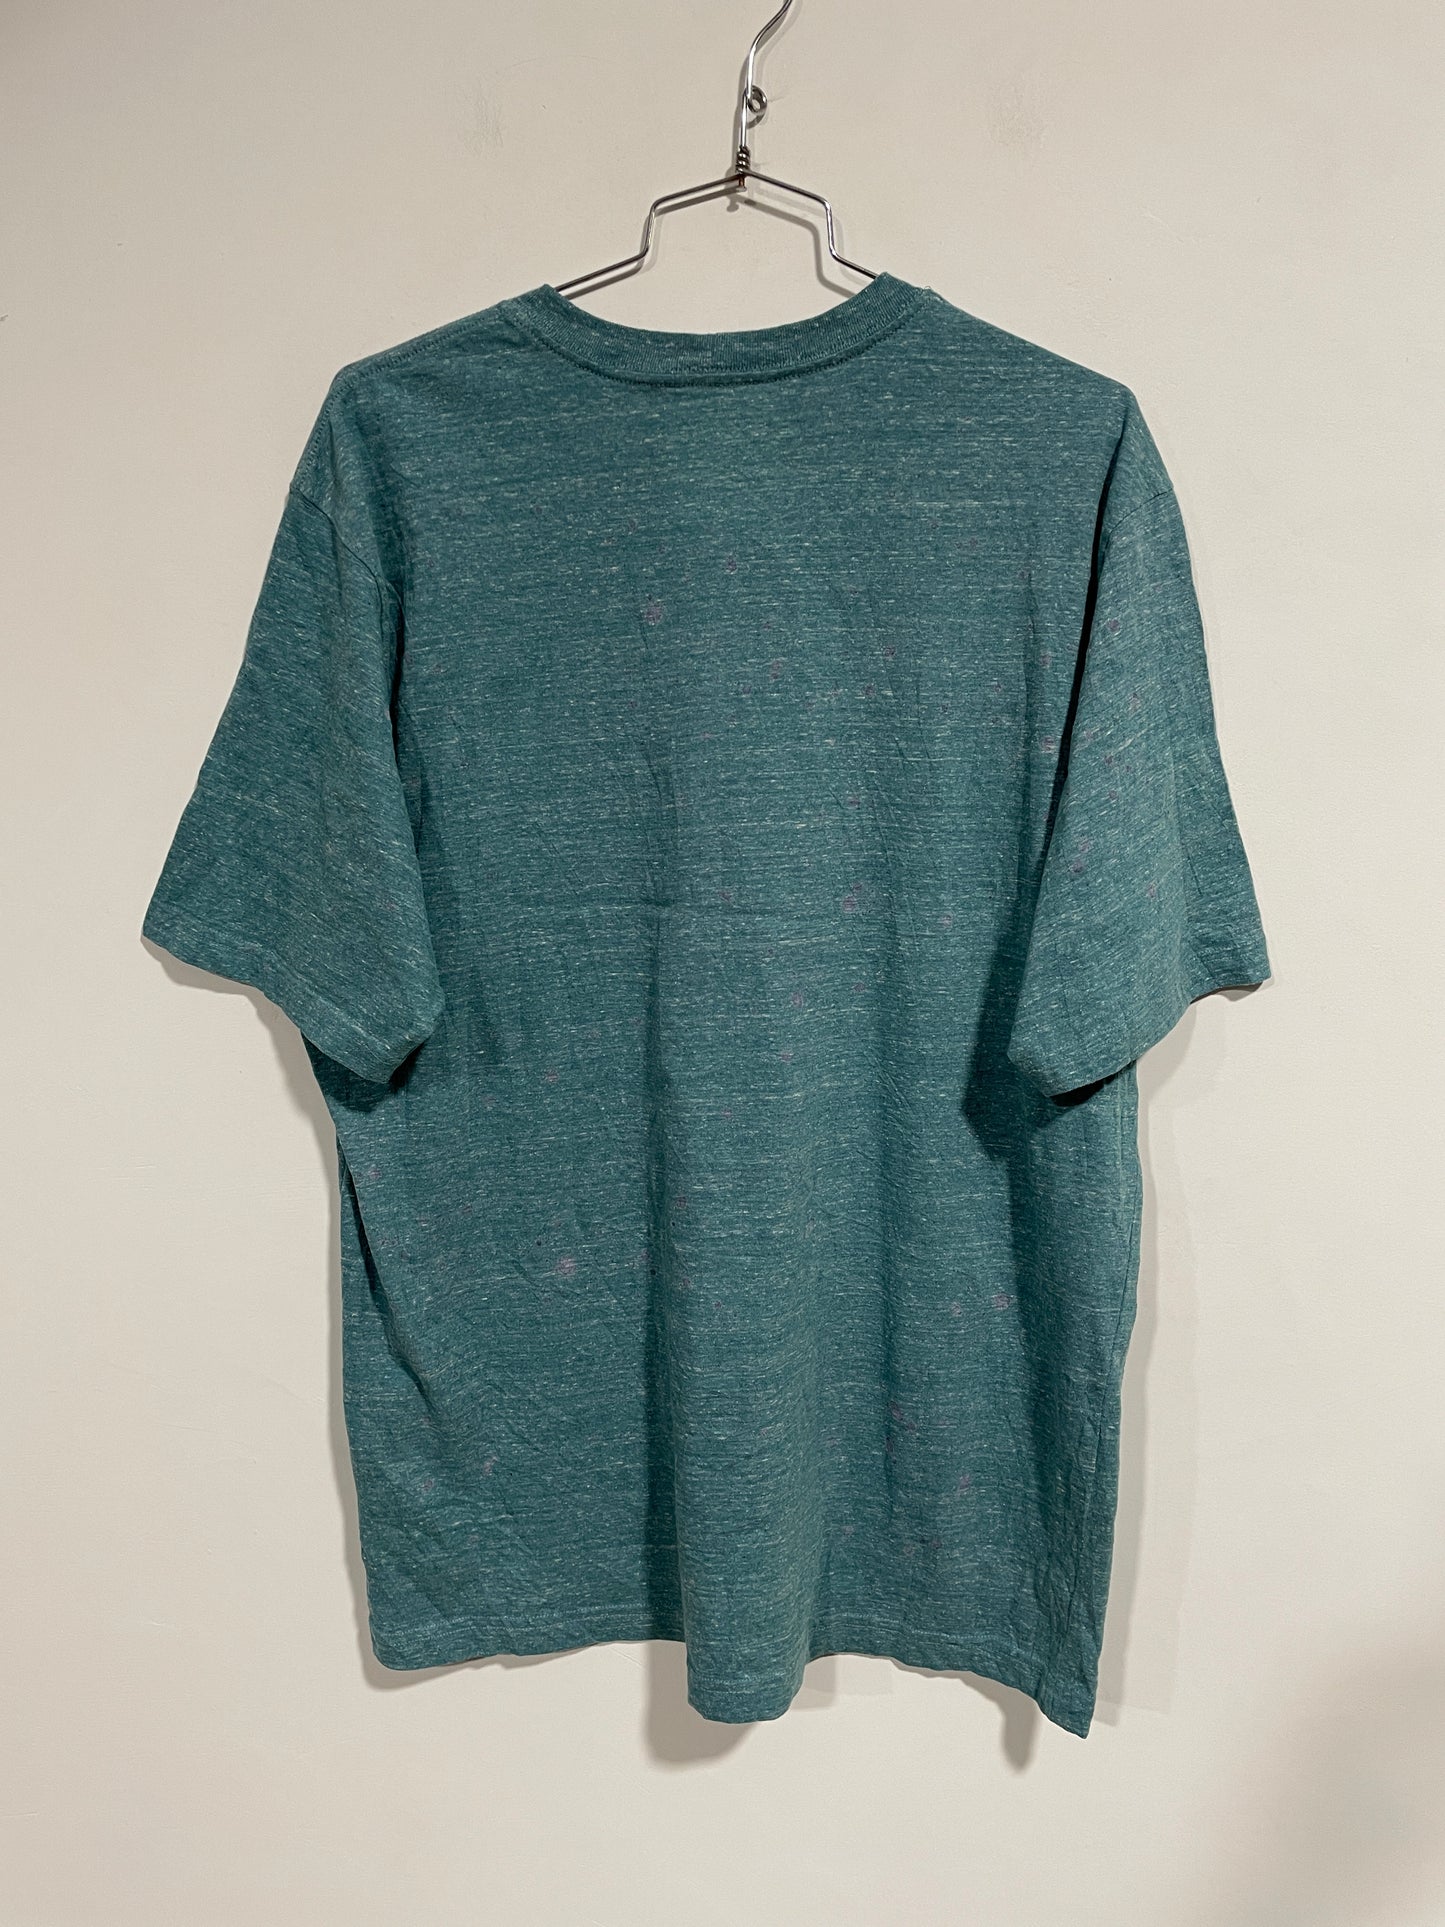 T shirt Carhartt workwear (MR116)